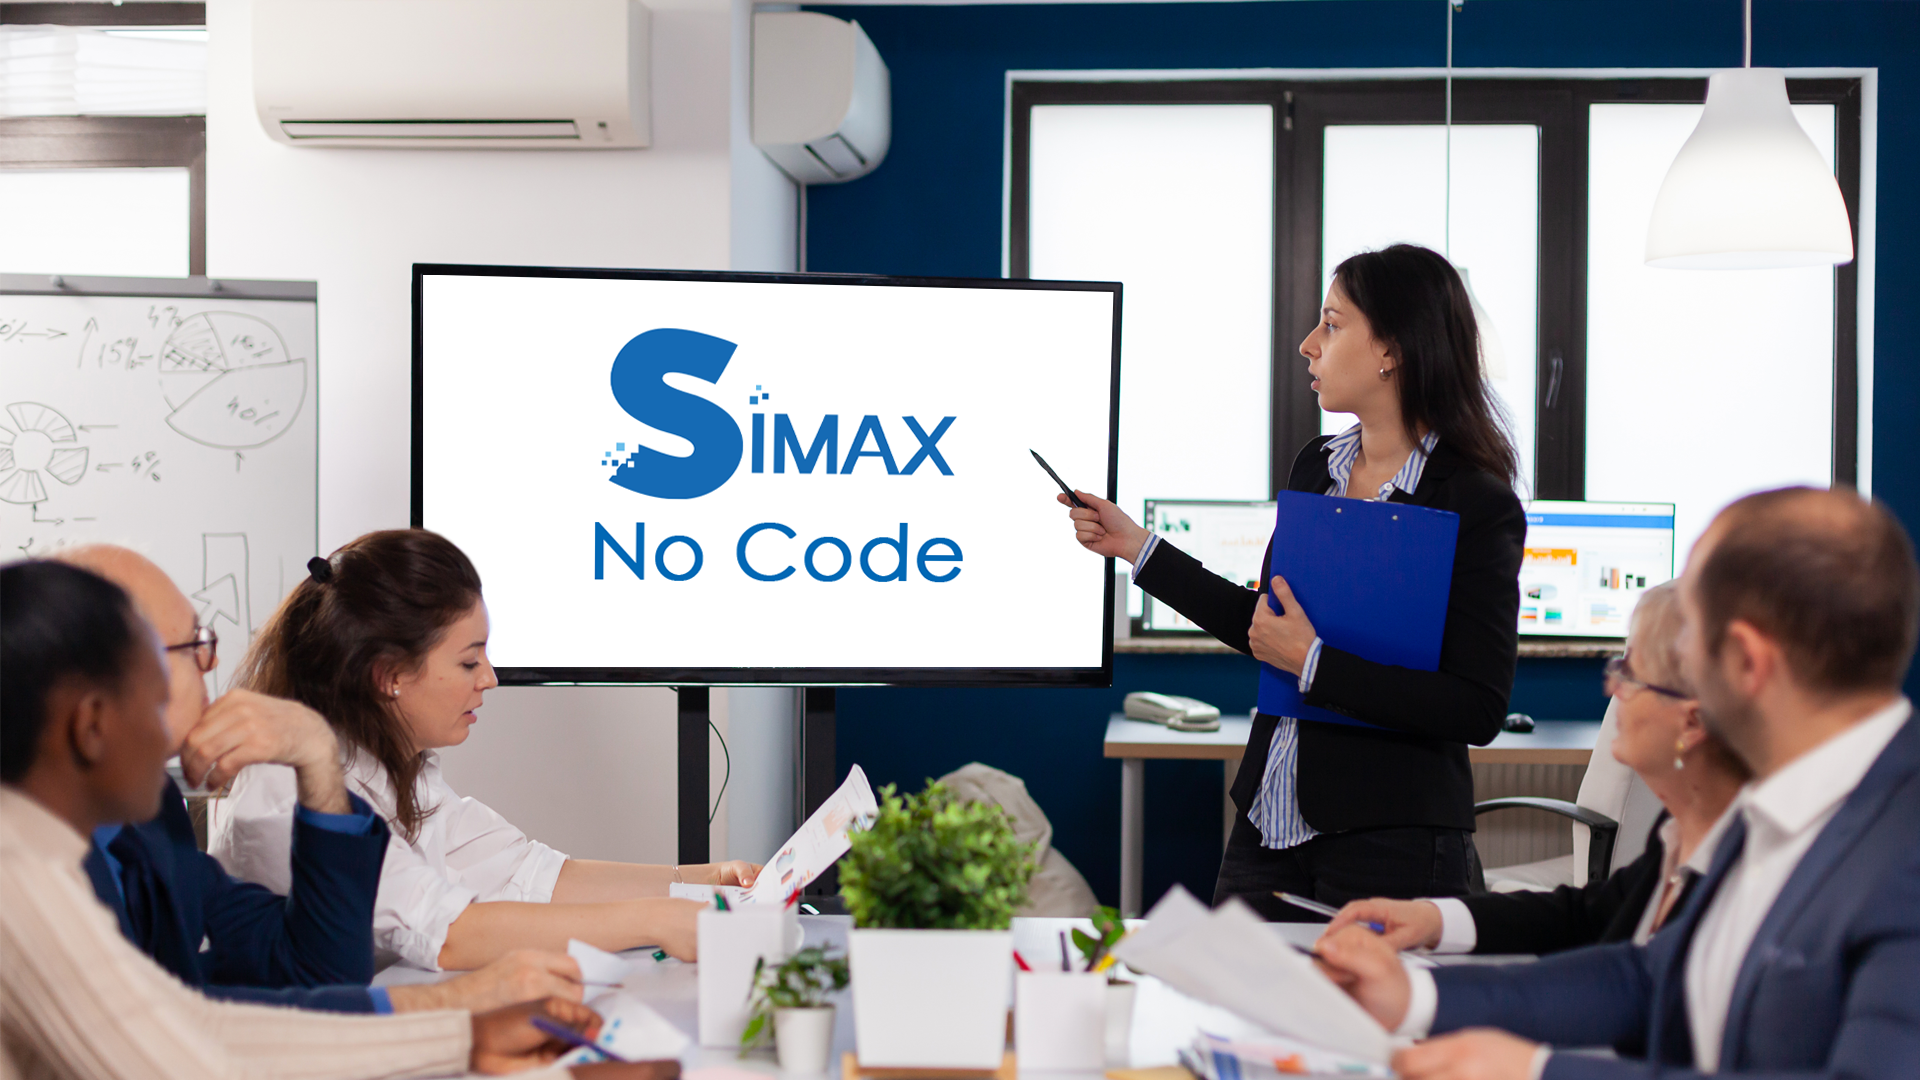 Formation No Code gratuite avec SIMAX !